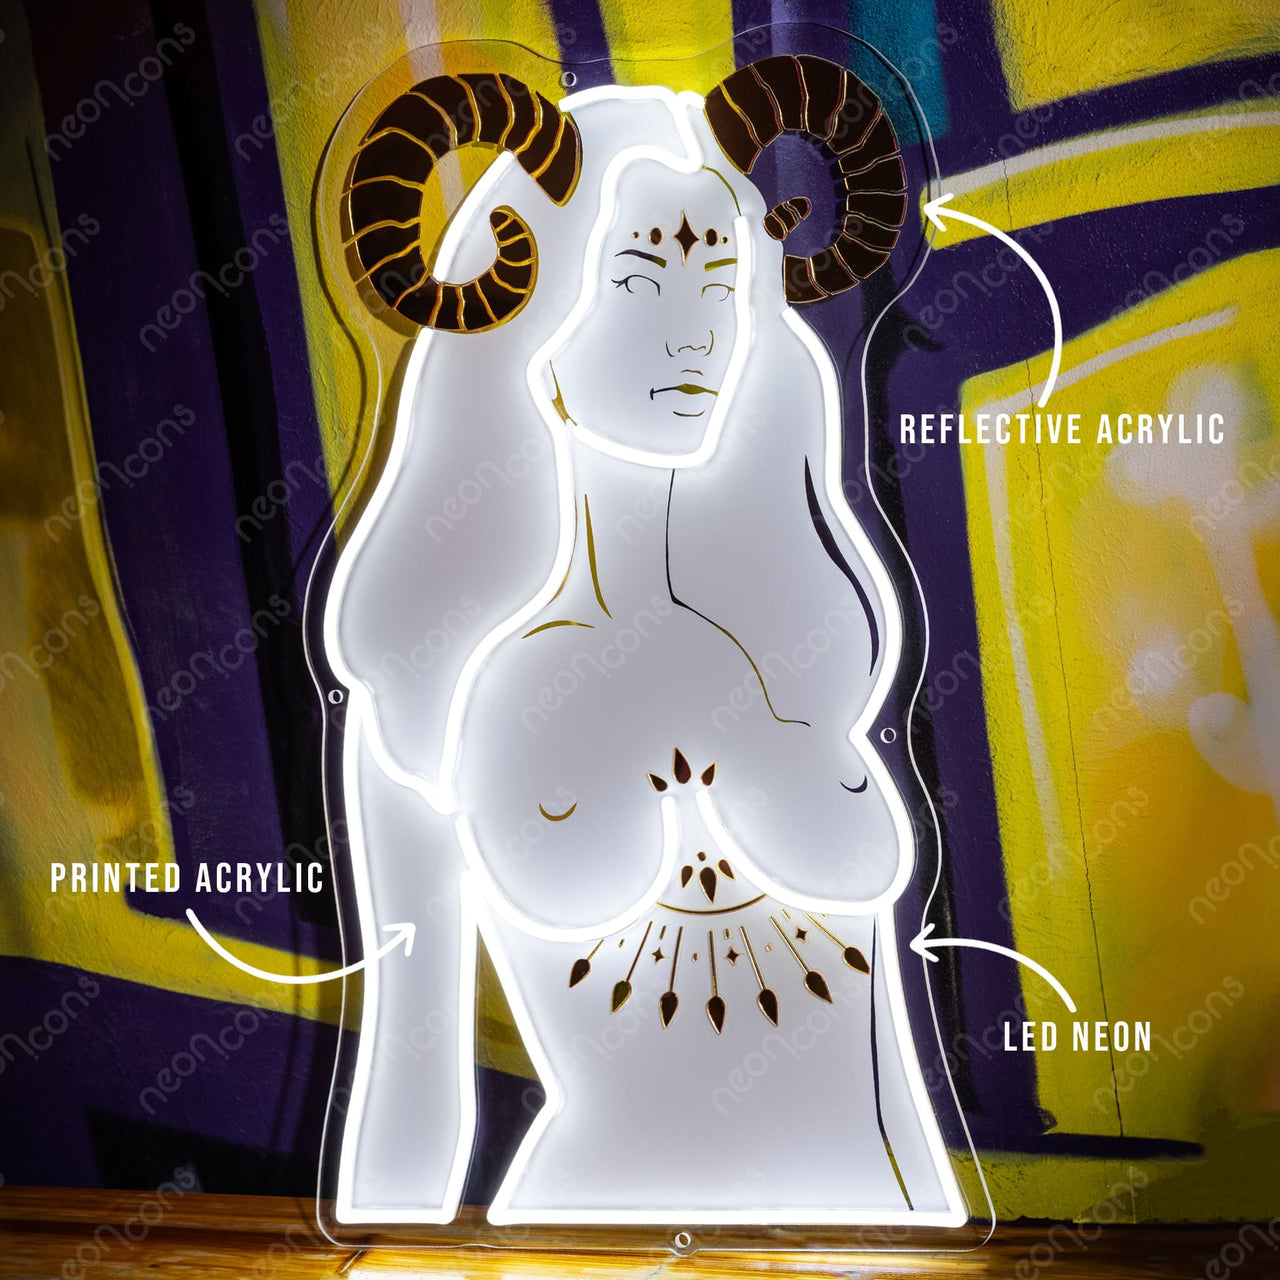 "Virgo Goddess" LED Neon x Print x Reflective Acrylic by Neon Icons